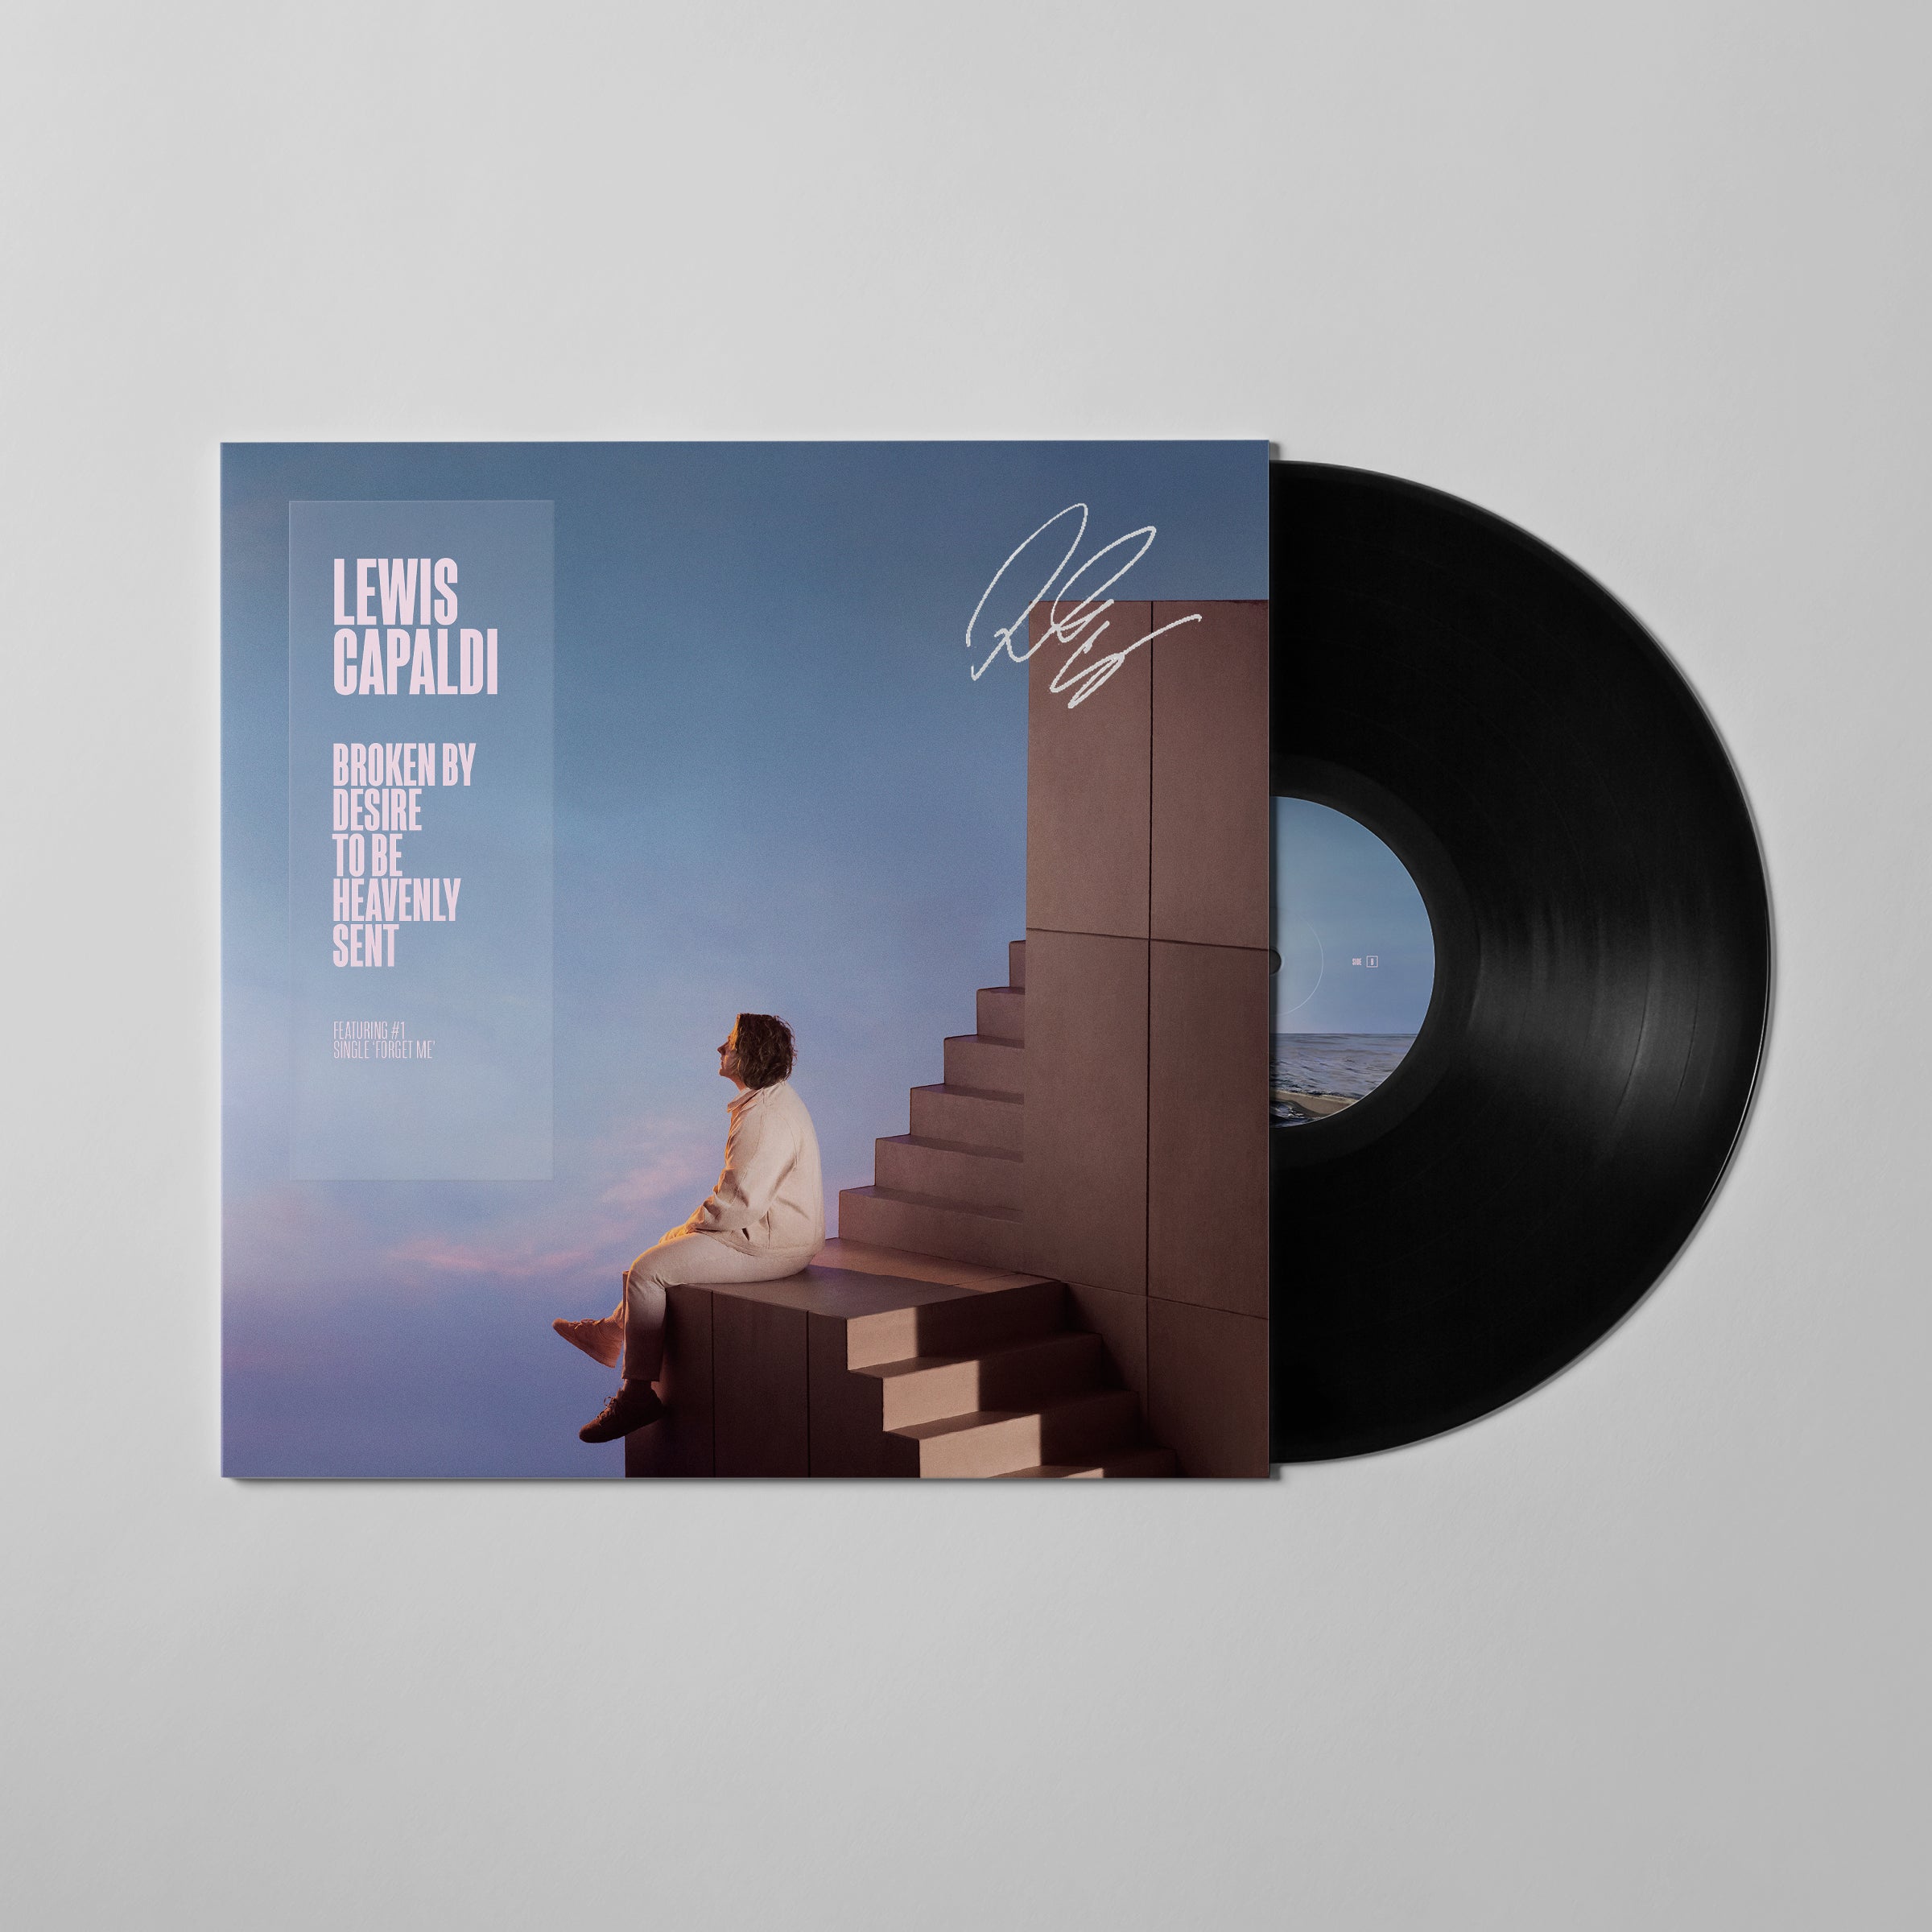 Lewis Capaldi - Broken By Desire To Be Heavenly Sent: Signed Vinyl LP